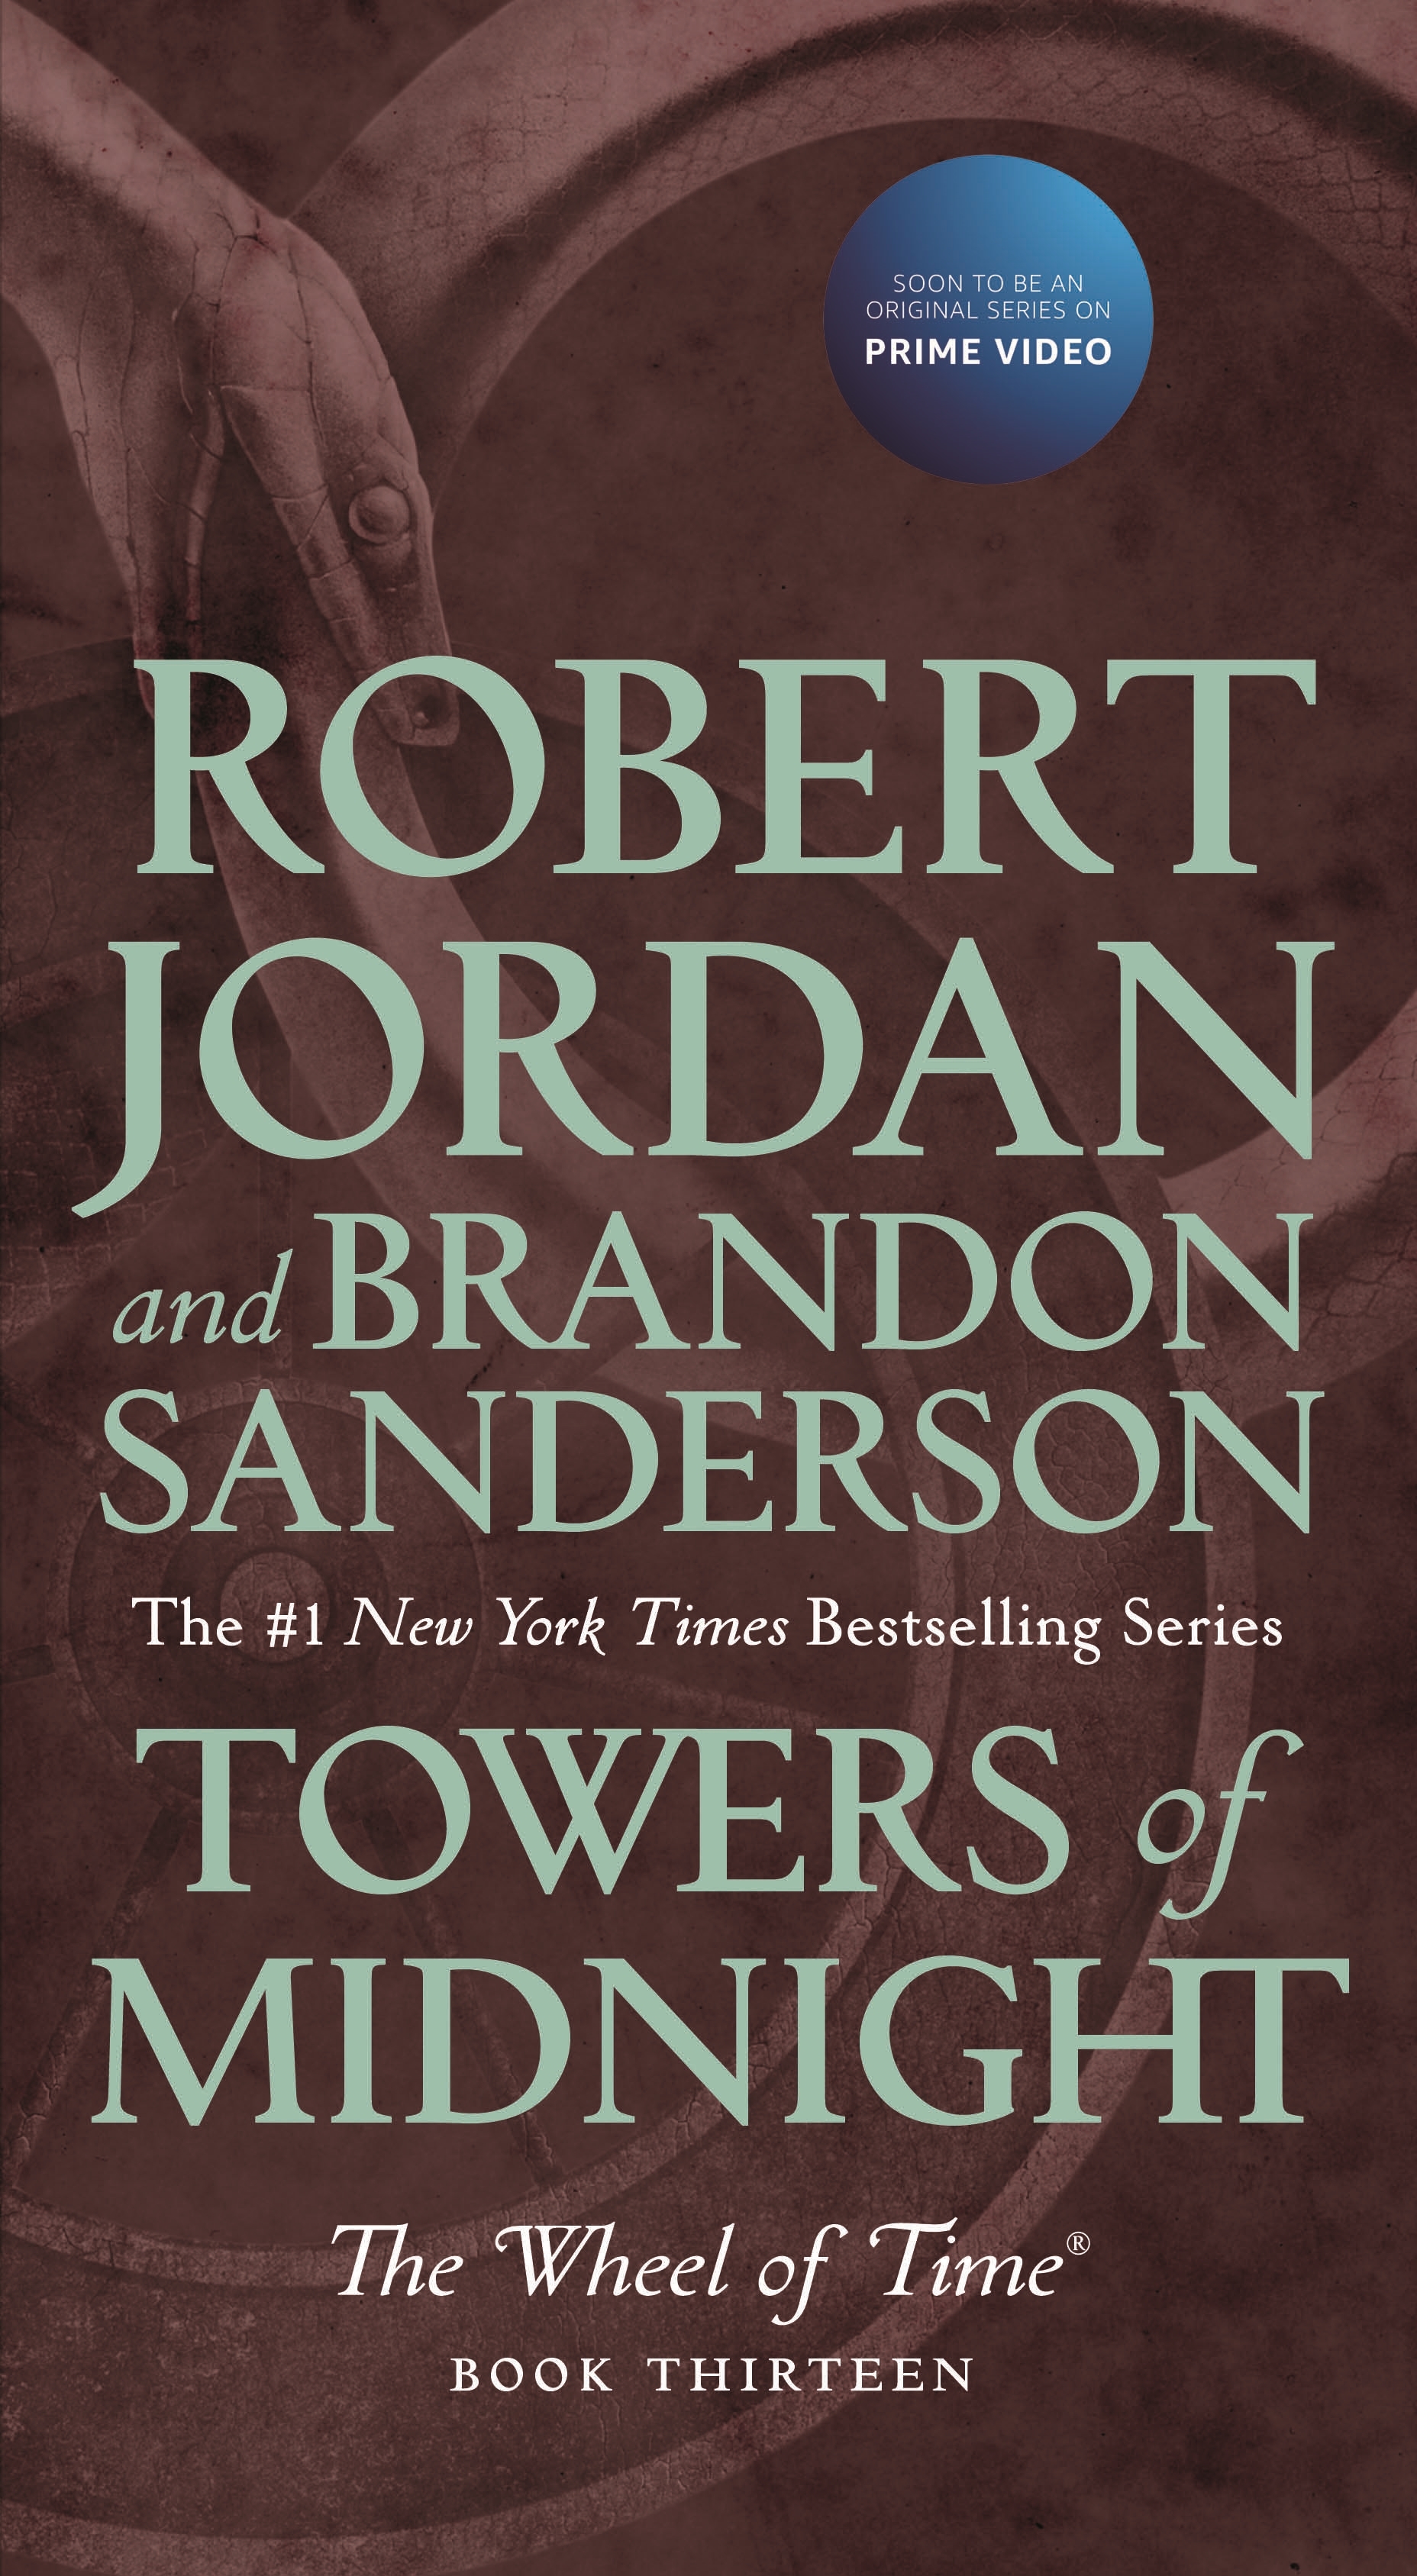 Towers of Midnight : Book Thirteen of The Wheel of Time by Robert Jordan, Brandon Sanderson